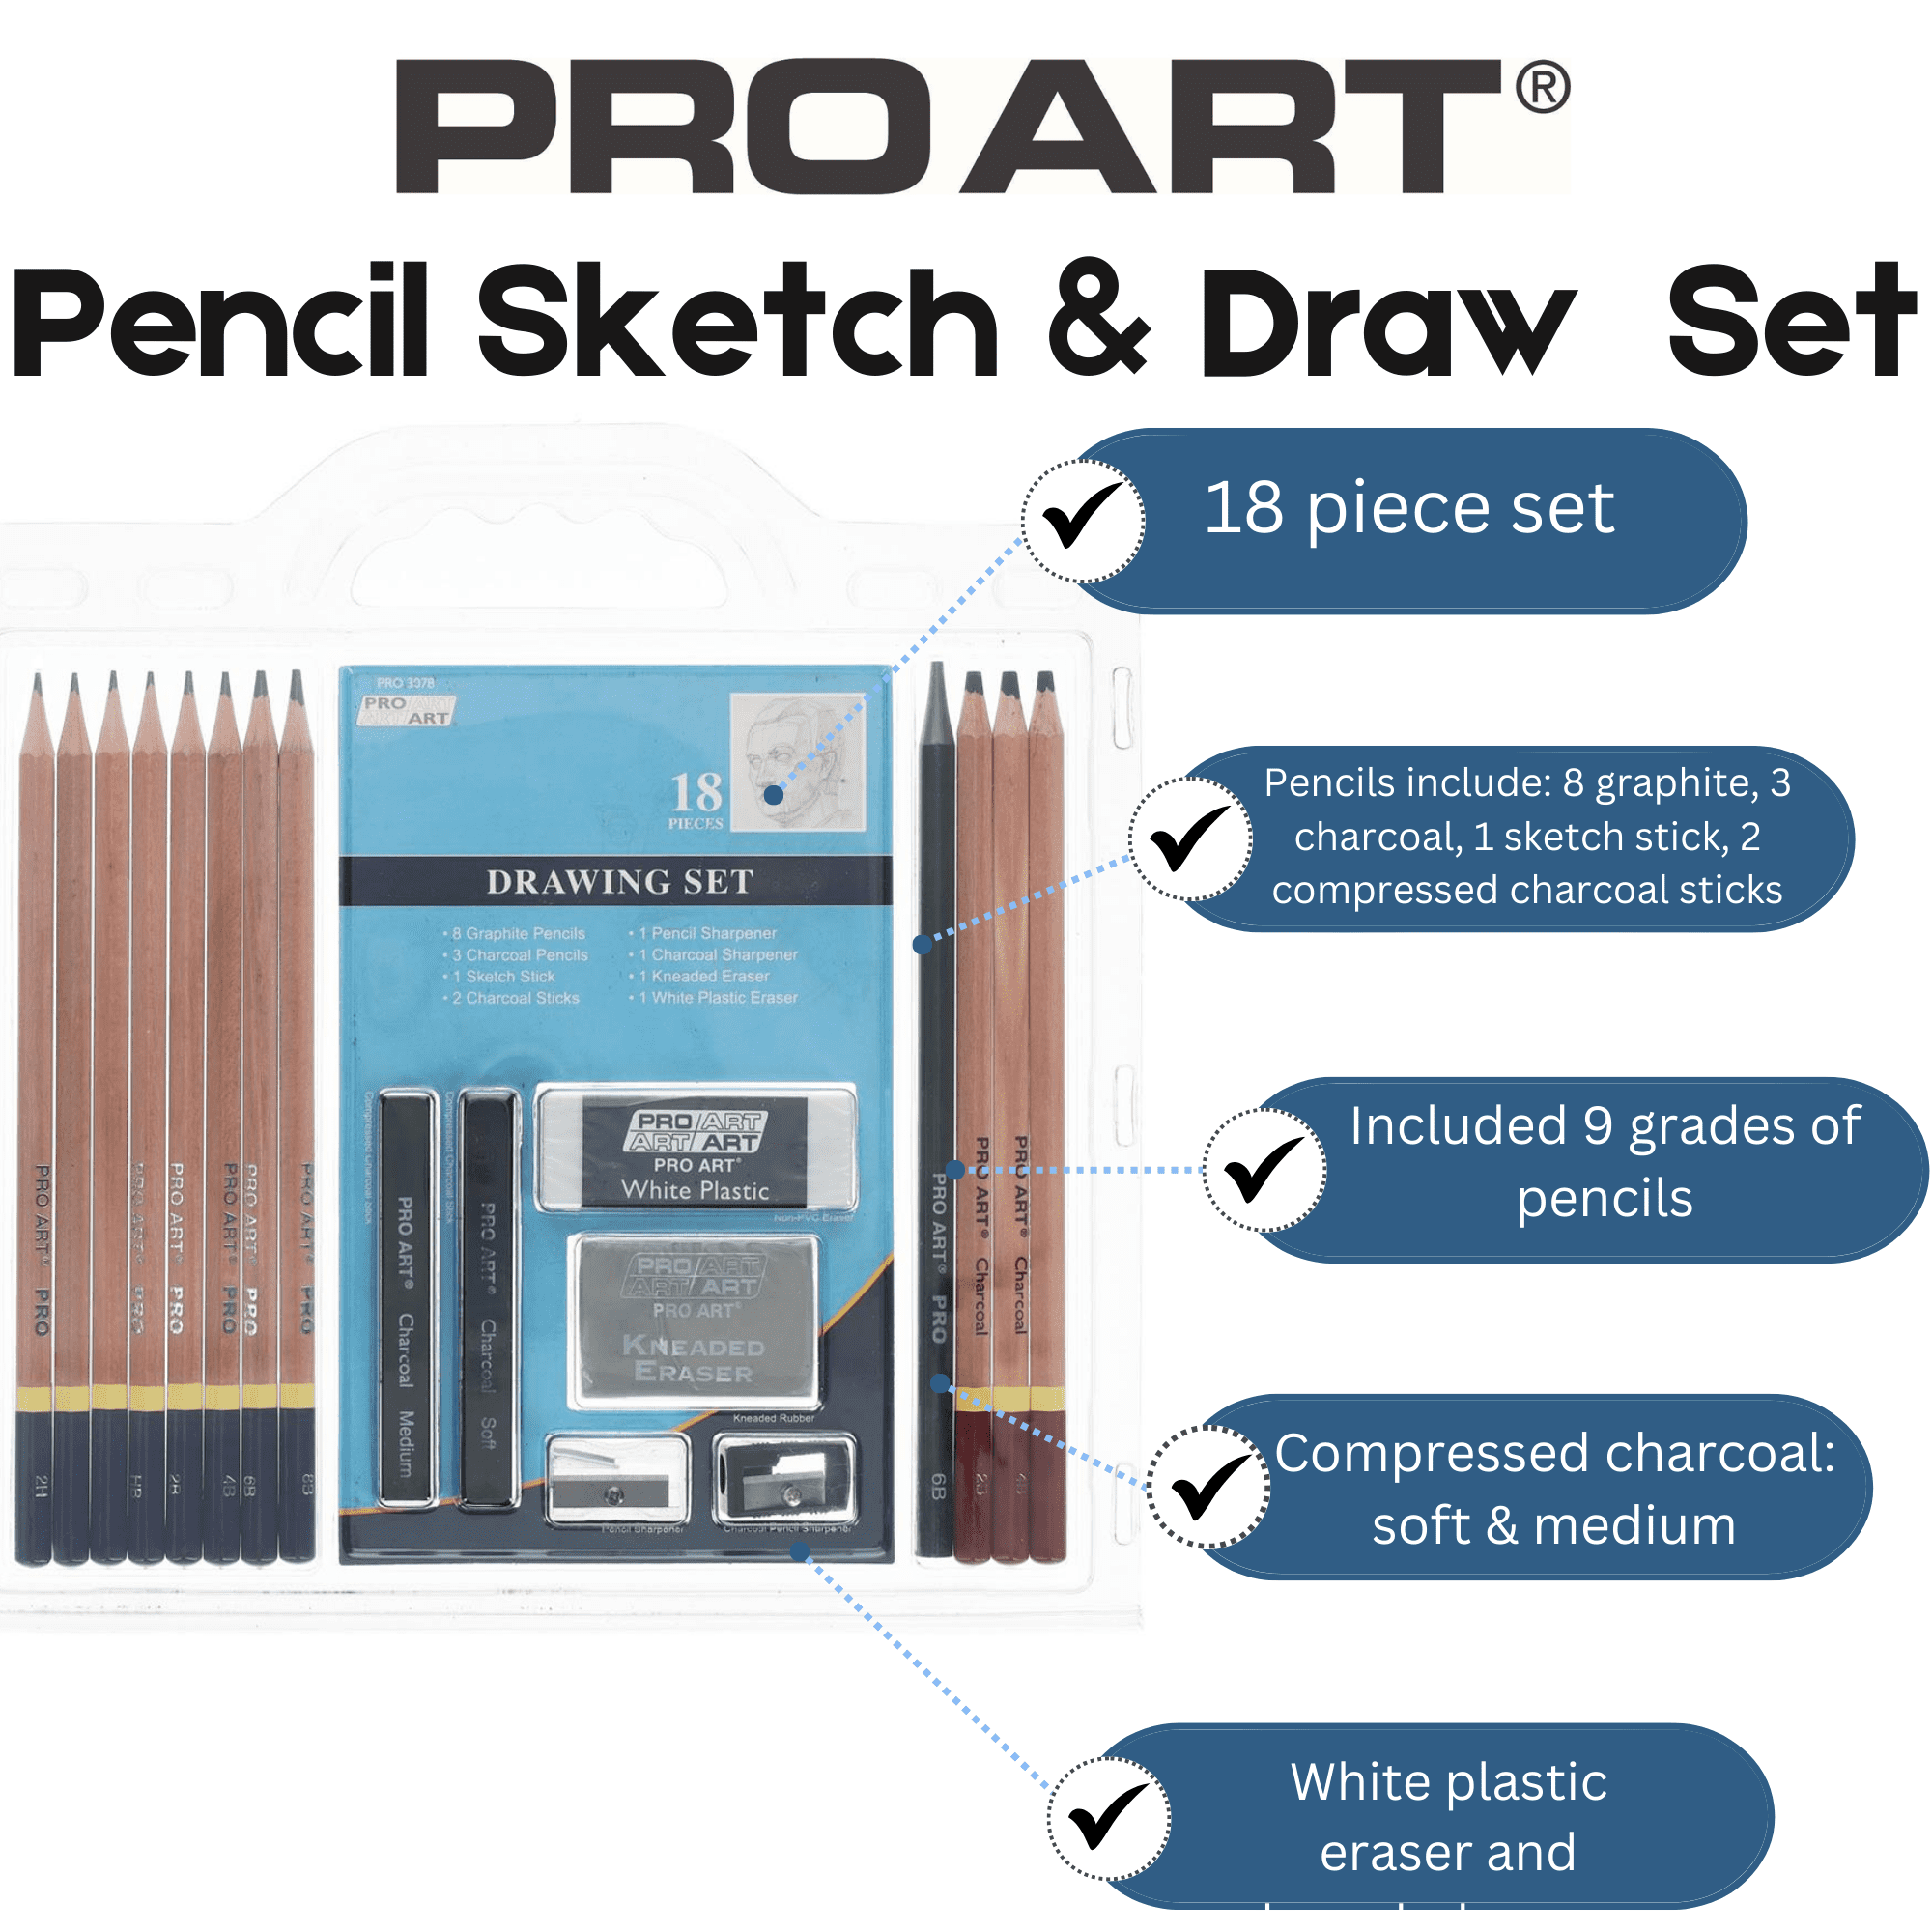 POPMISOLER 72 Pcs Drawing Sketching Pencil Set, Professional Art